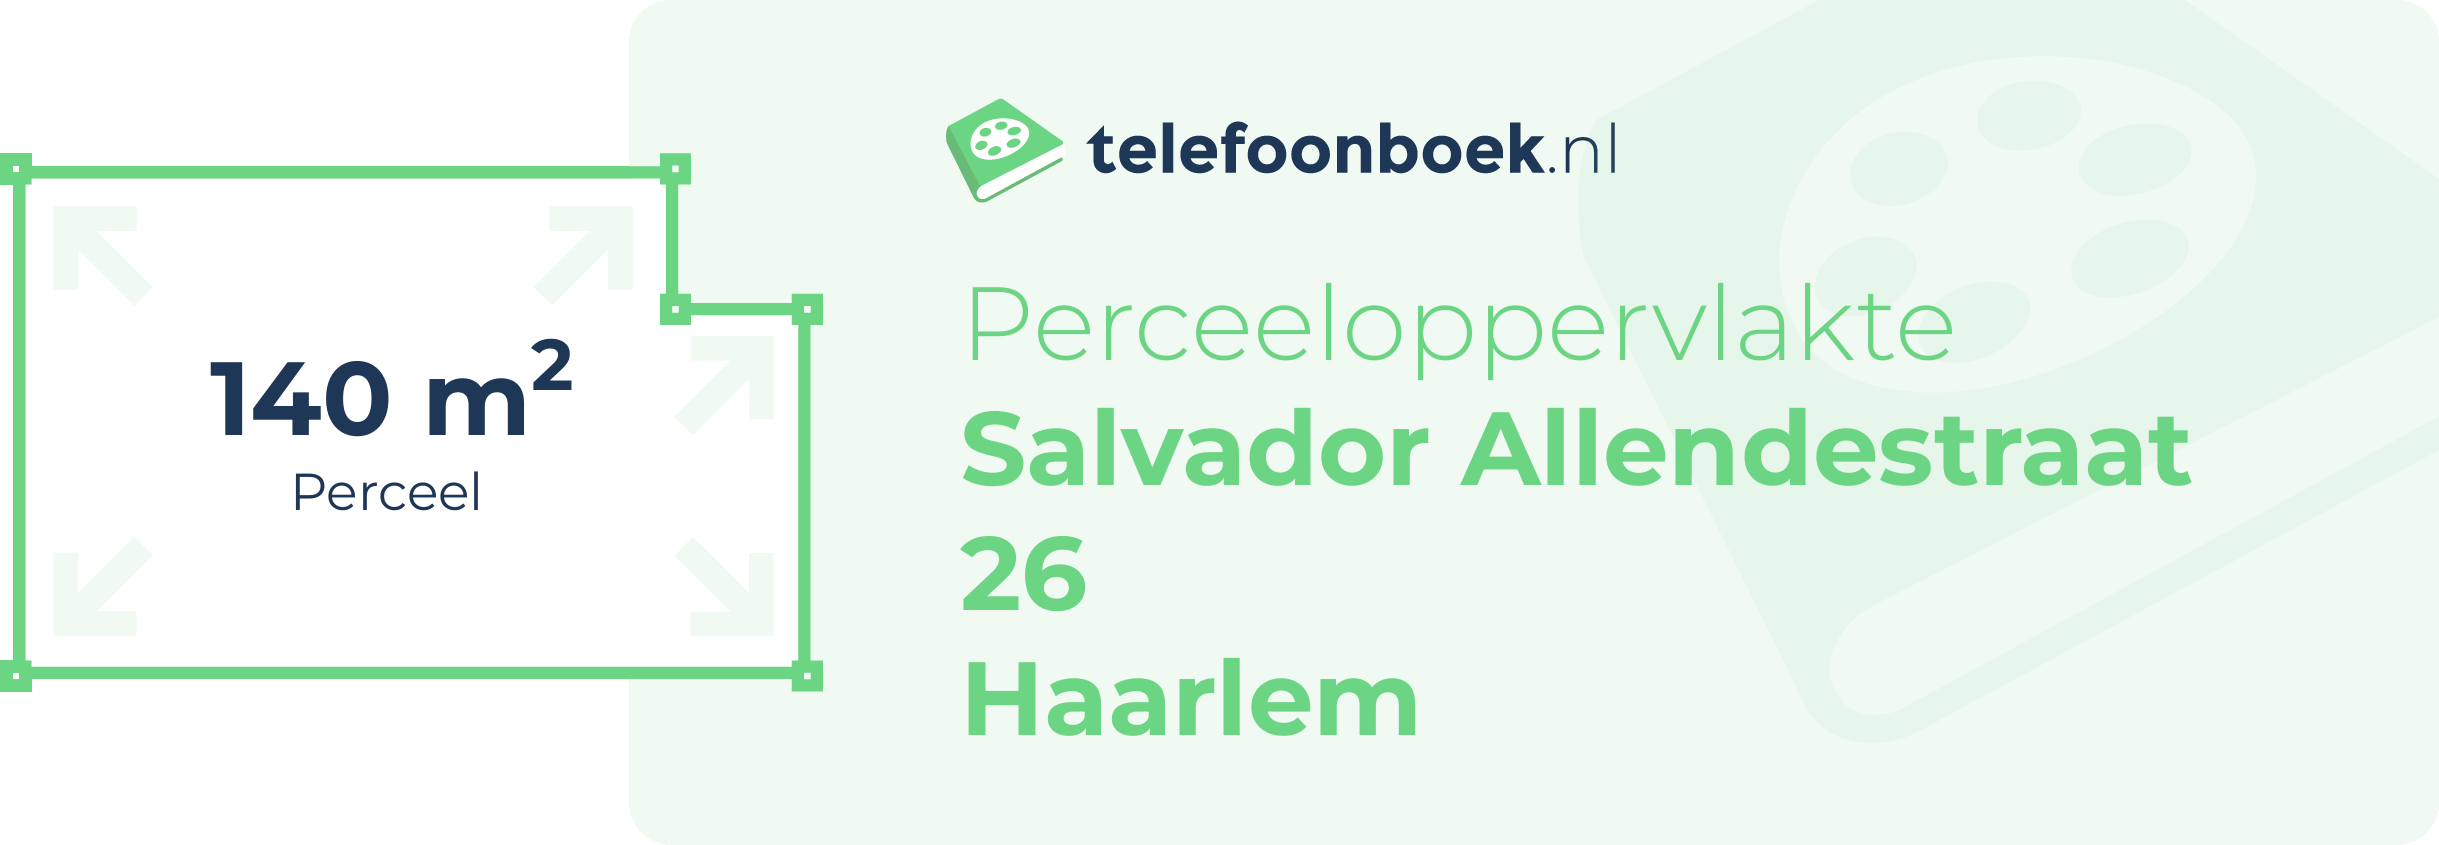 Perceeloppervlakte Salvador Allendestraat 26 Haarlem